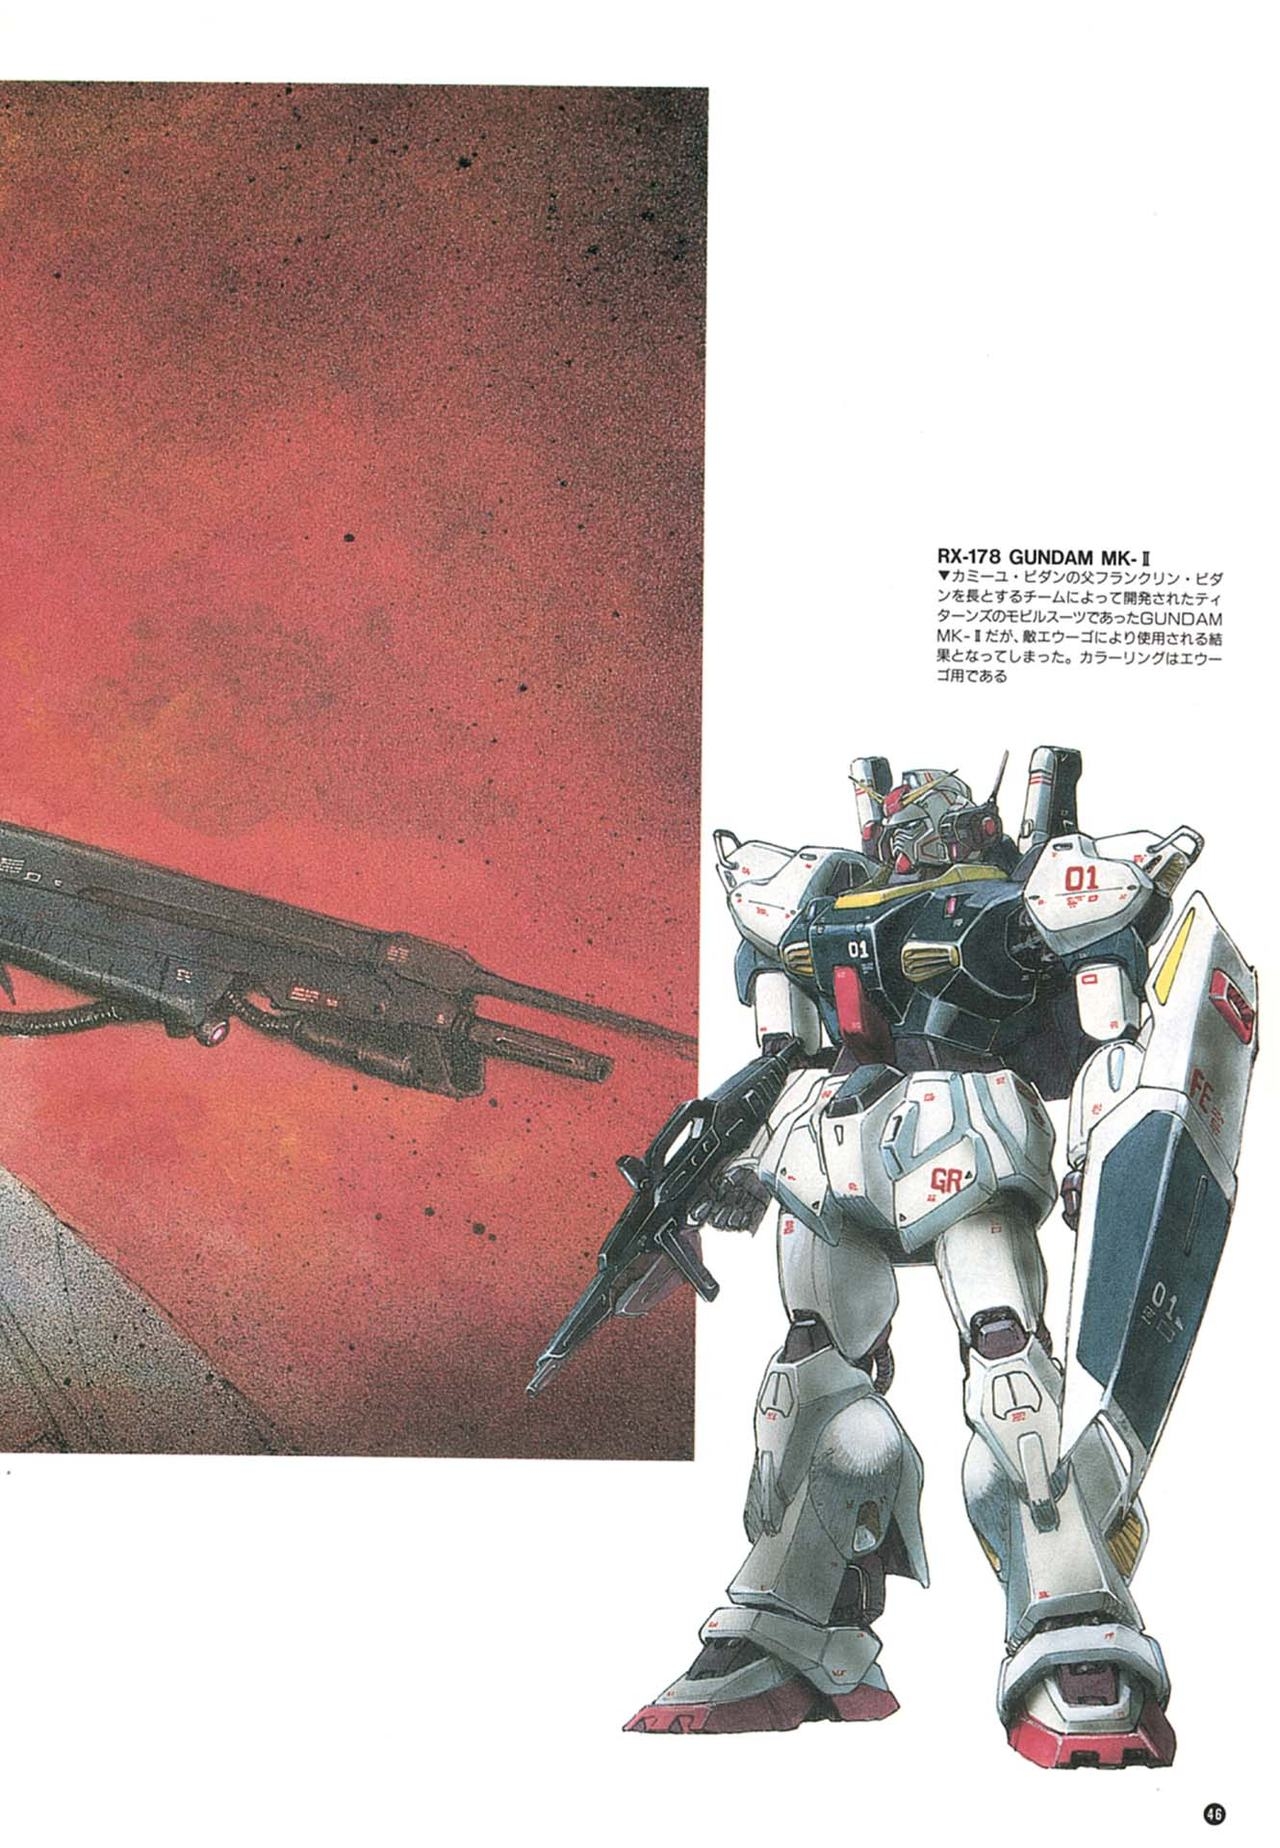 [Kazuhisa Kondo] Kazuhisa Kondo 2D & 3D Works - Go Ahead - From Mobile Suit Gundam to Original Mechanism 45